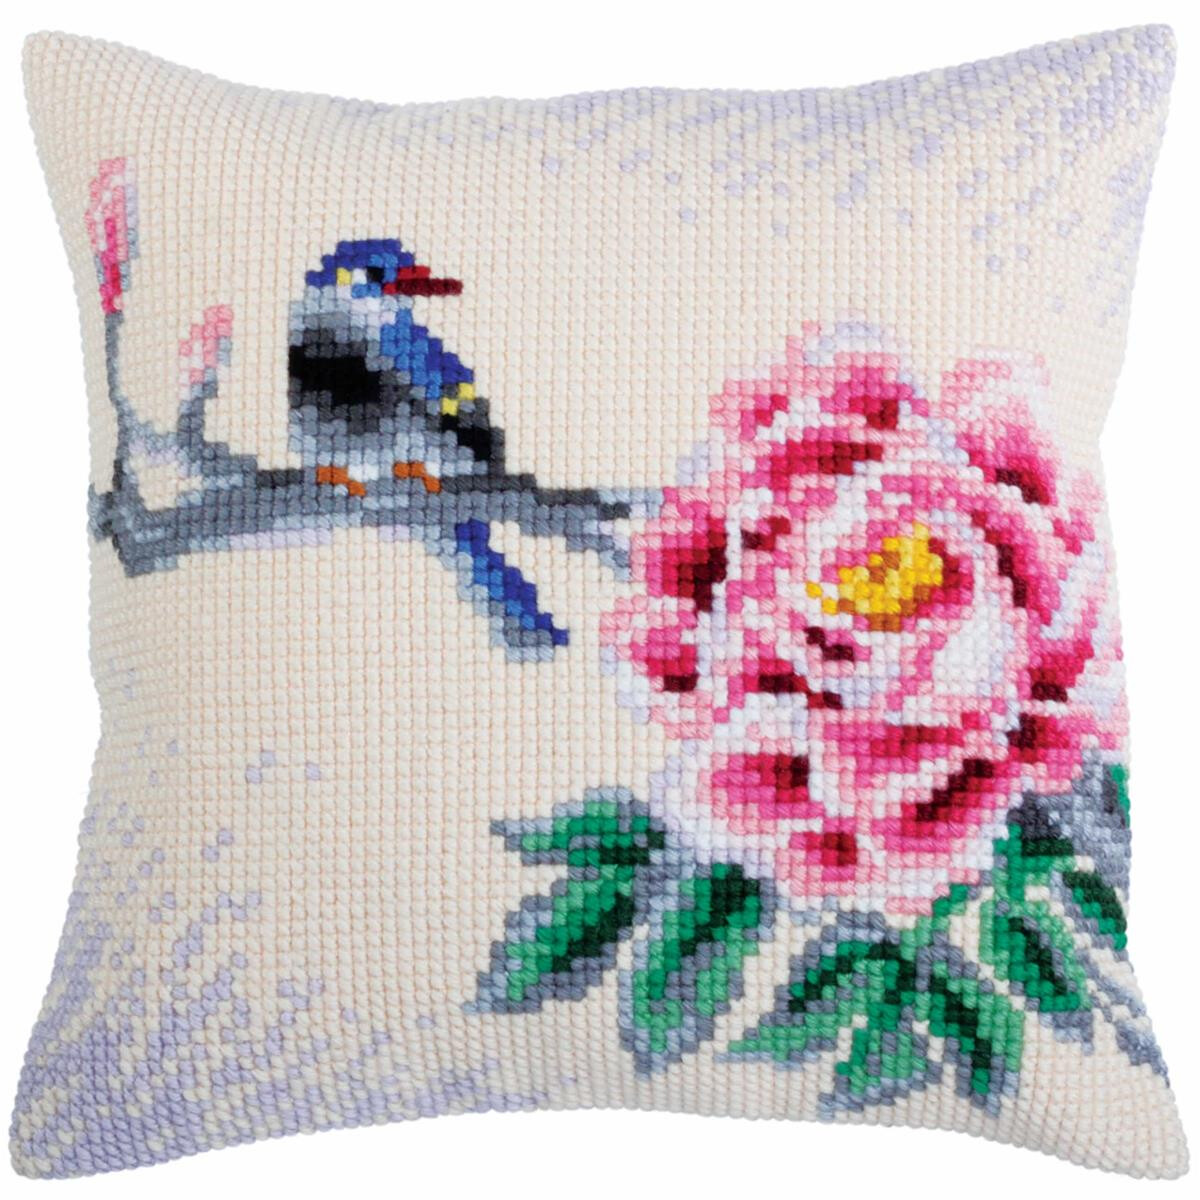 CdA stamped cross stitch kit cushion "Flower and...